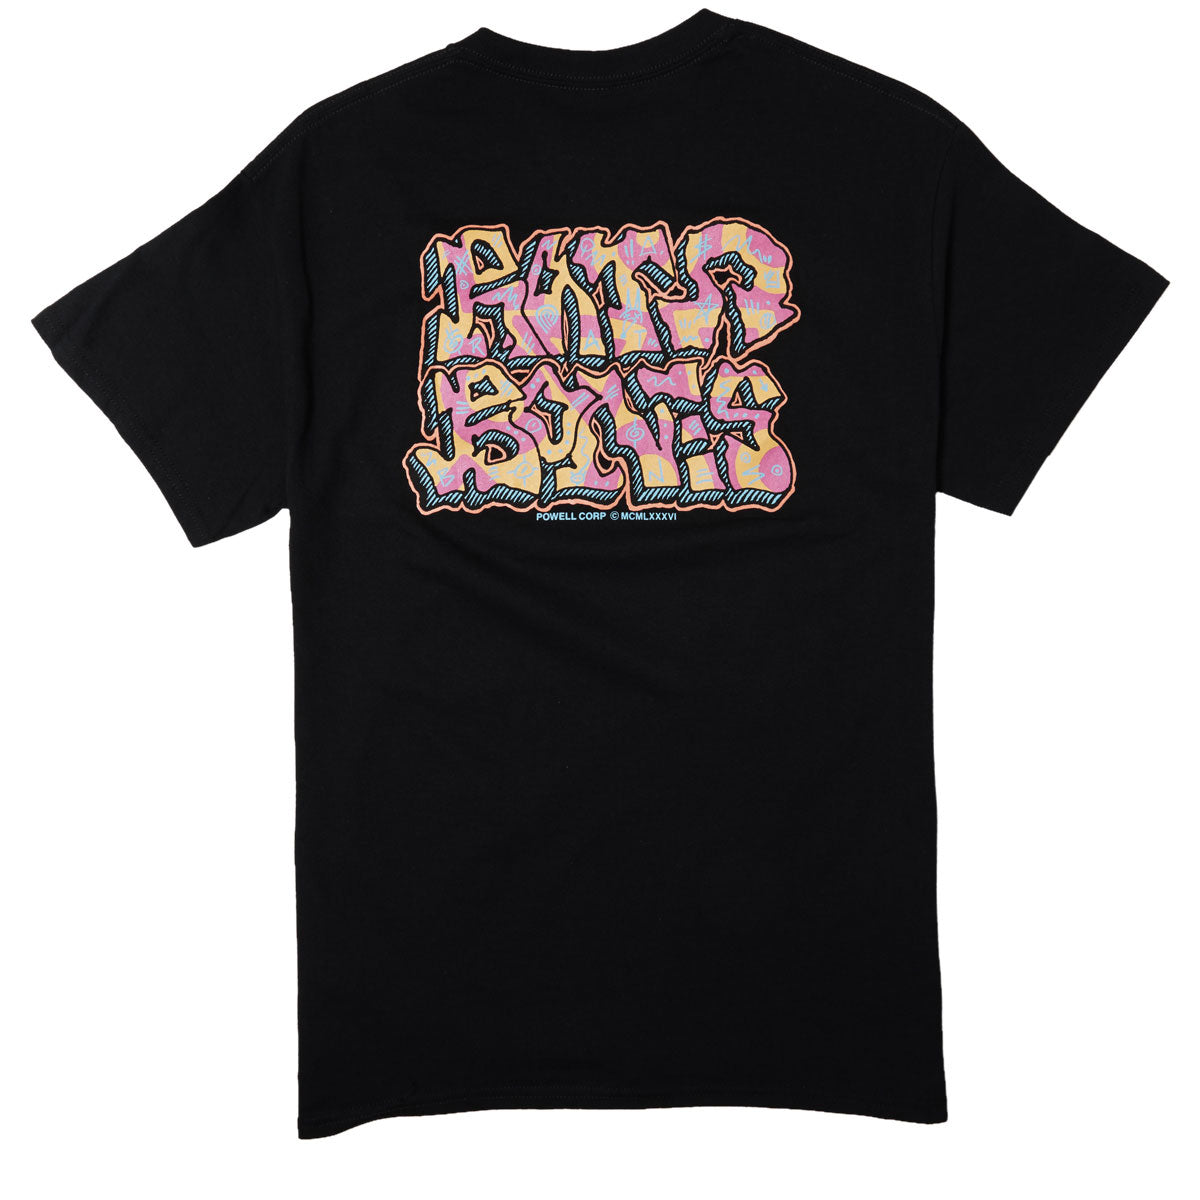 Powell-Peralta Rat Bones Grafitti T-Shirt - Black image 1